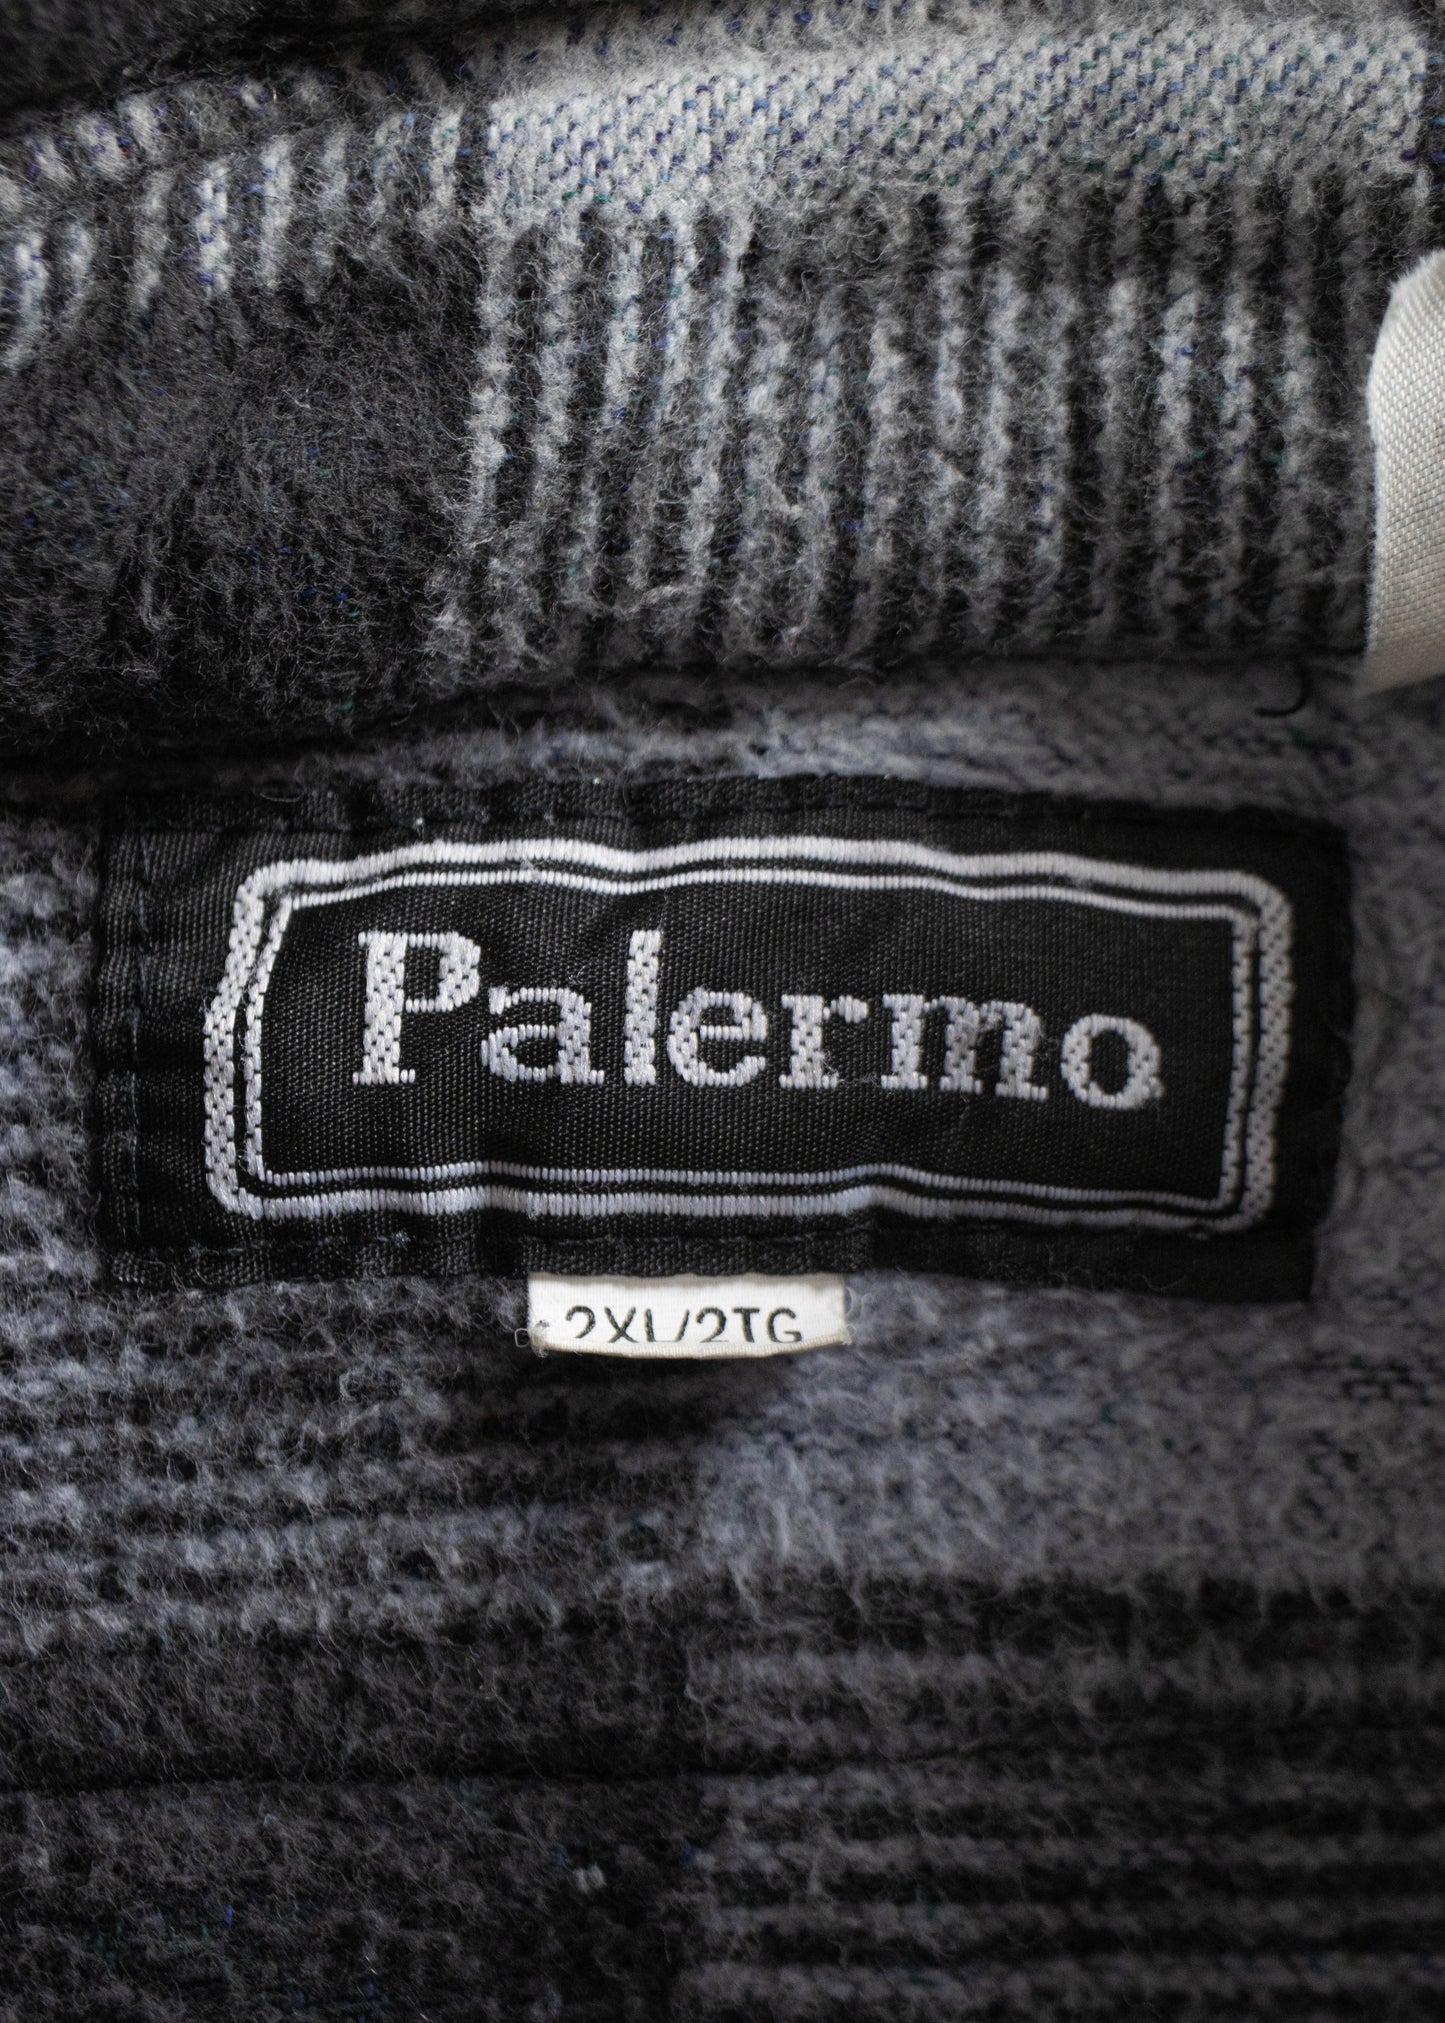 VIntage 1980s Palermo Cotton Flannel Button Up Size XL/2XL